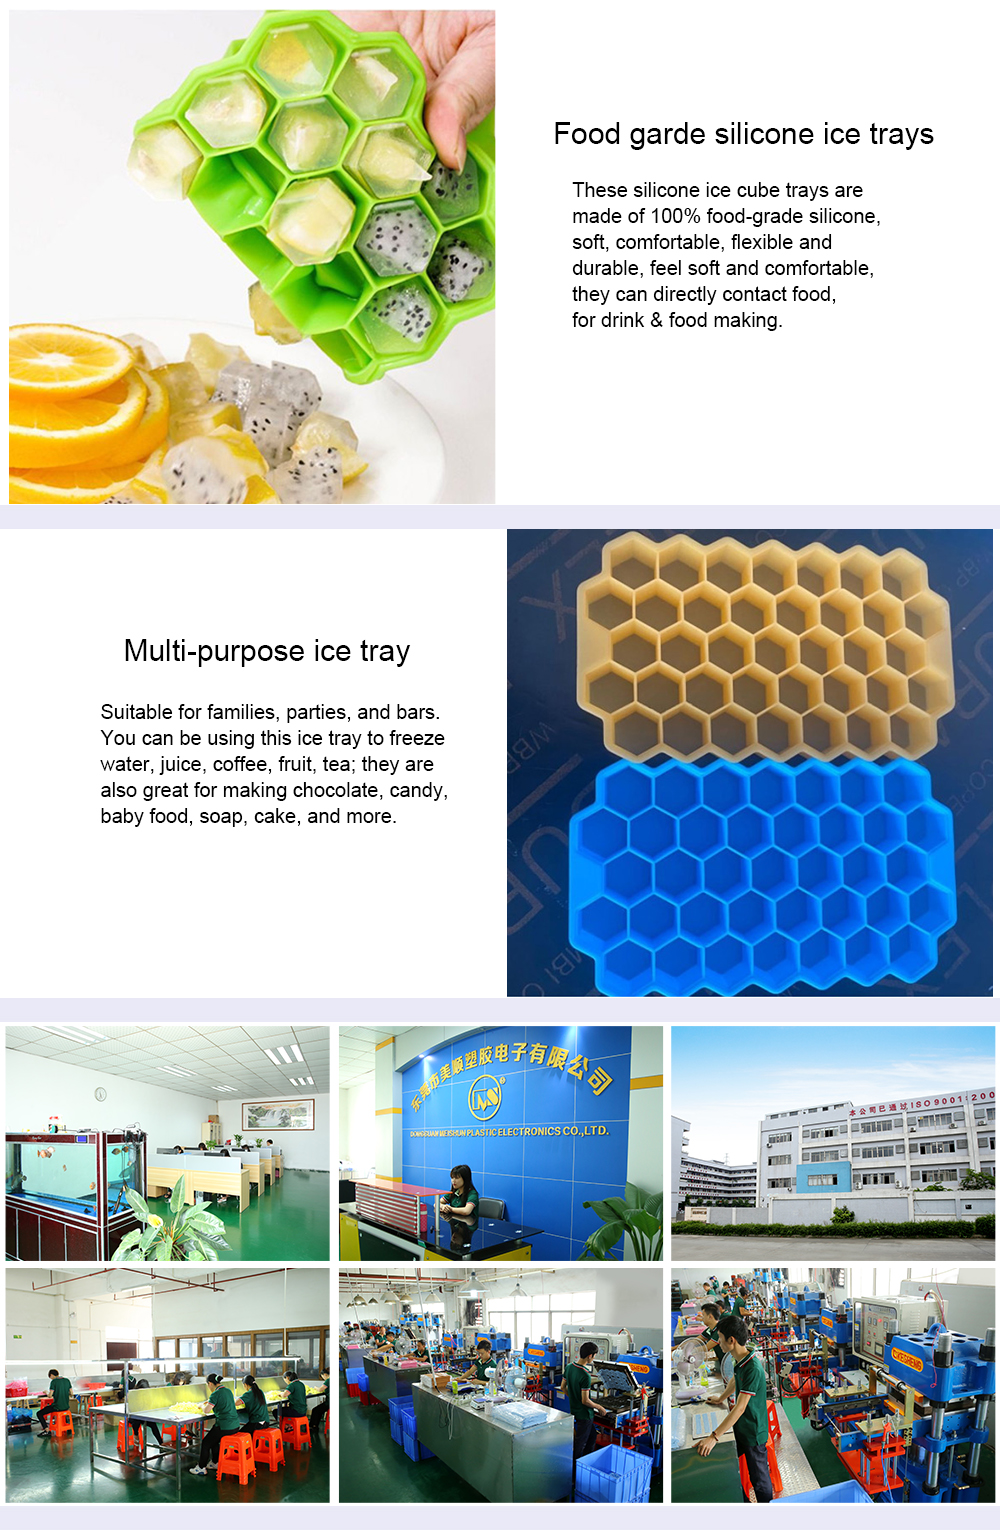 Non-toxic and environmentally friendly silicone ice tray